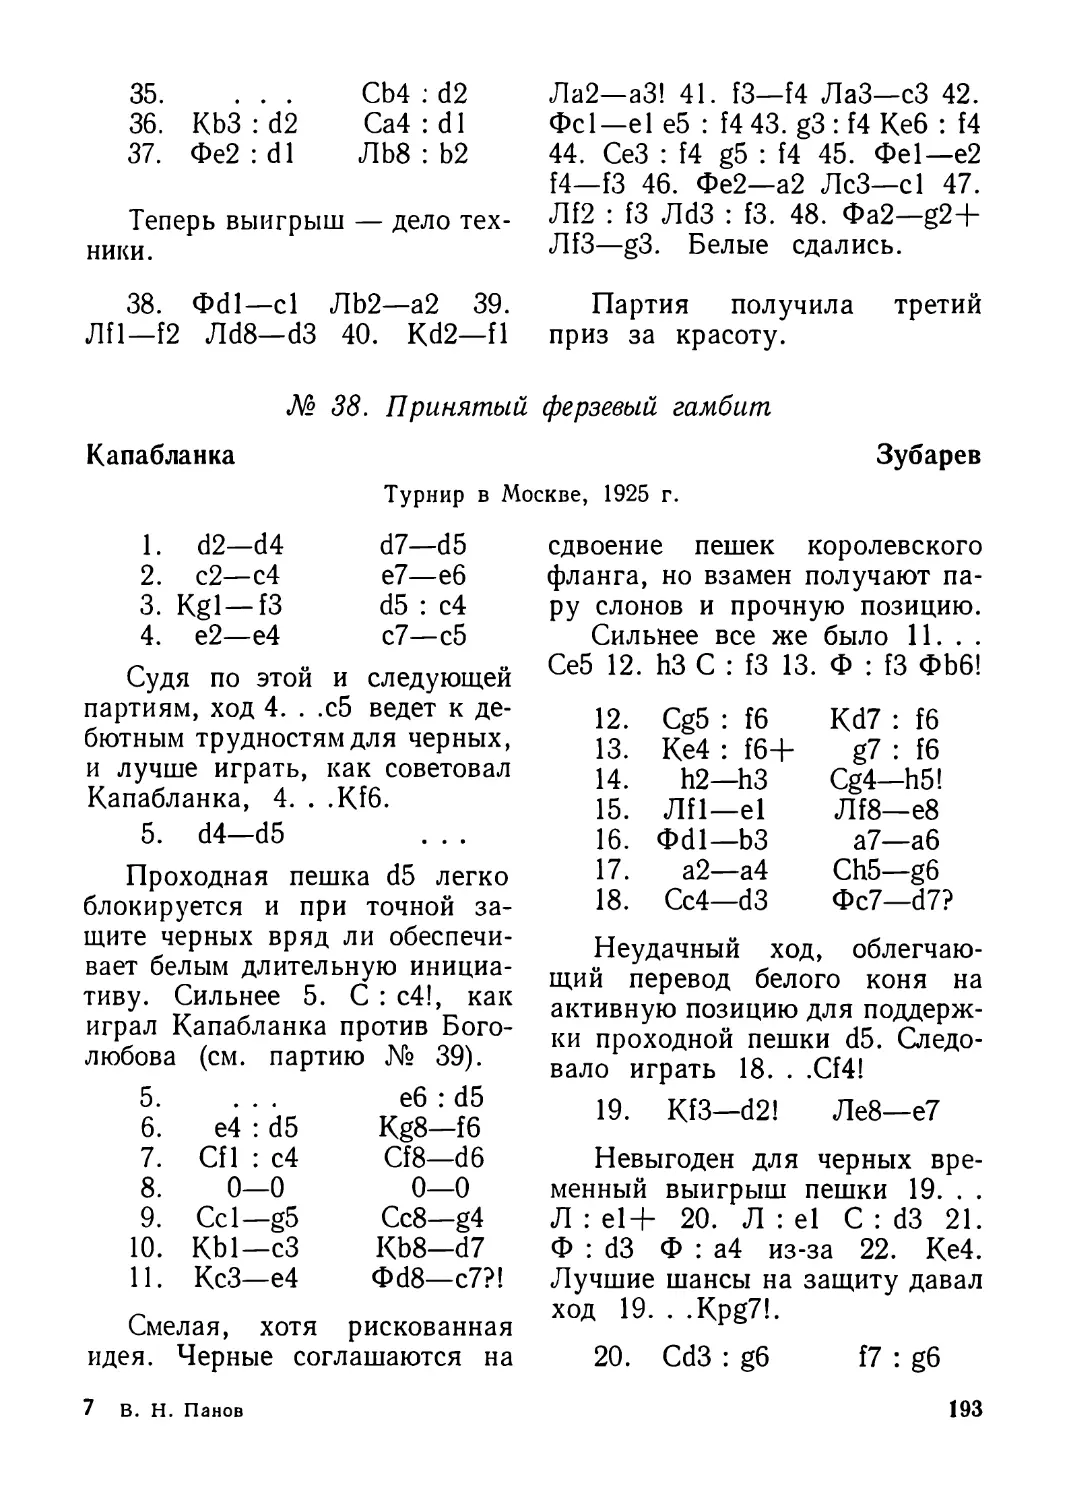 38.Капабланка — Зубарев, турнир в Москве 1925 г.